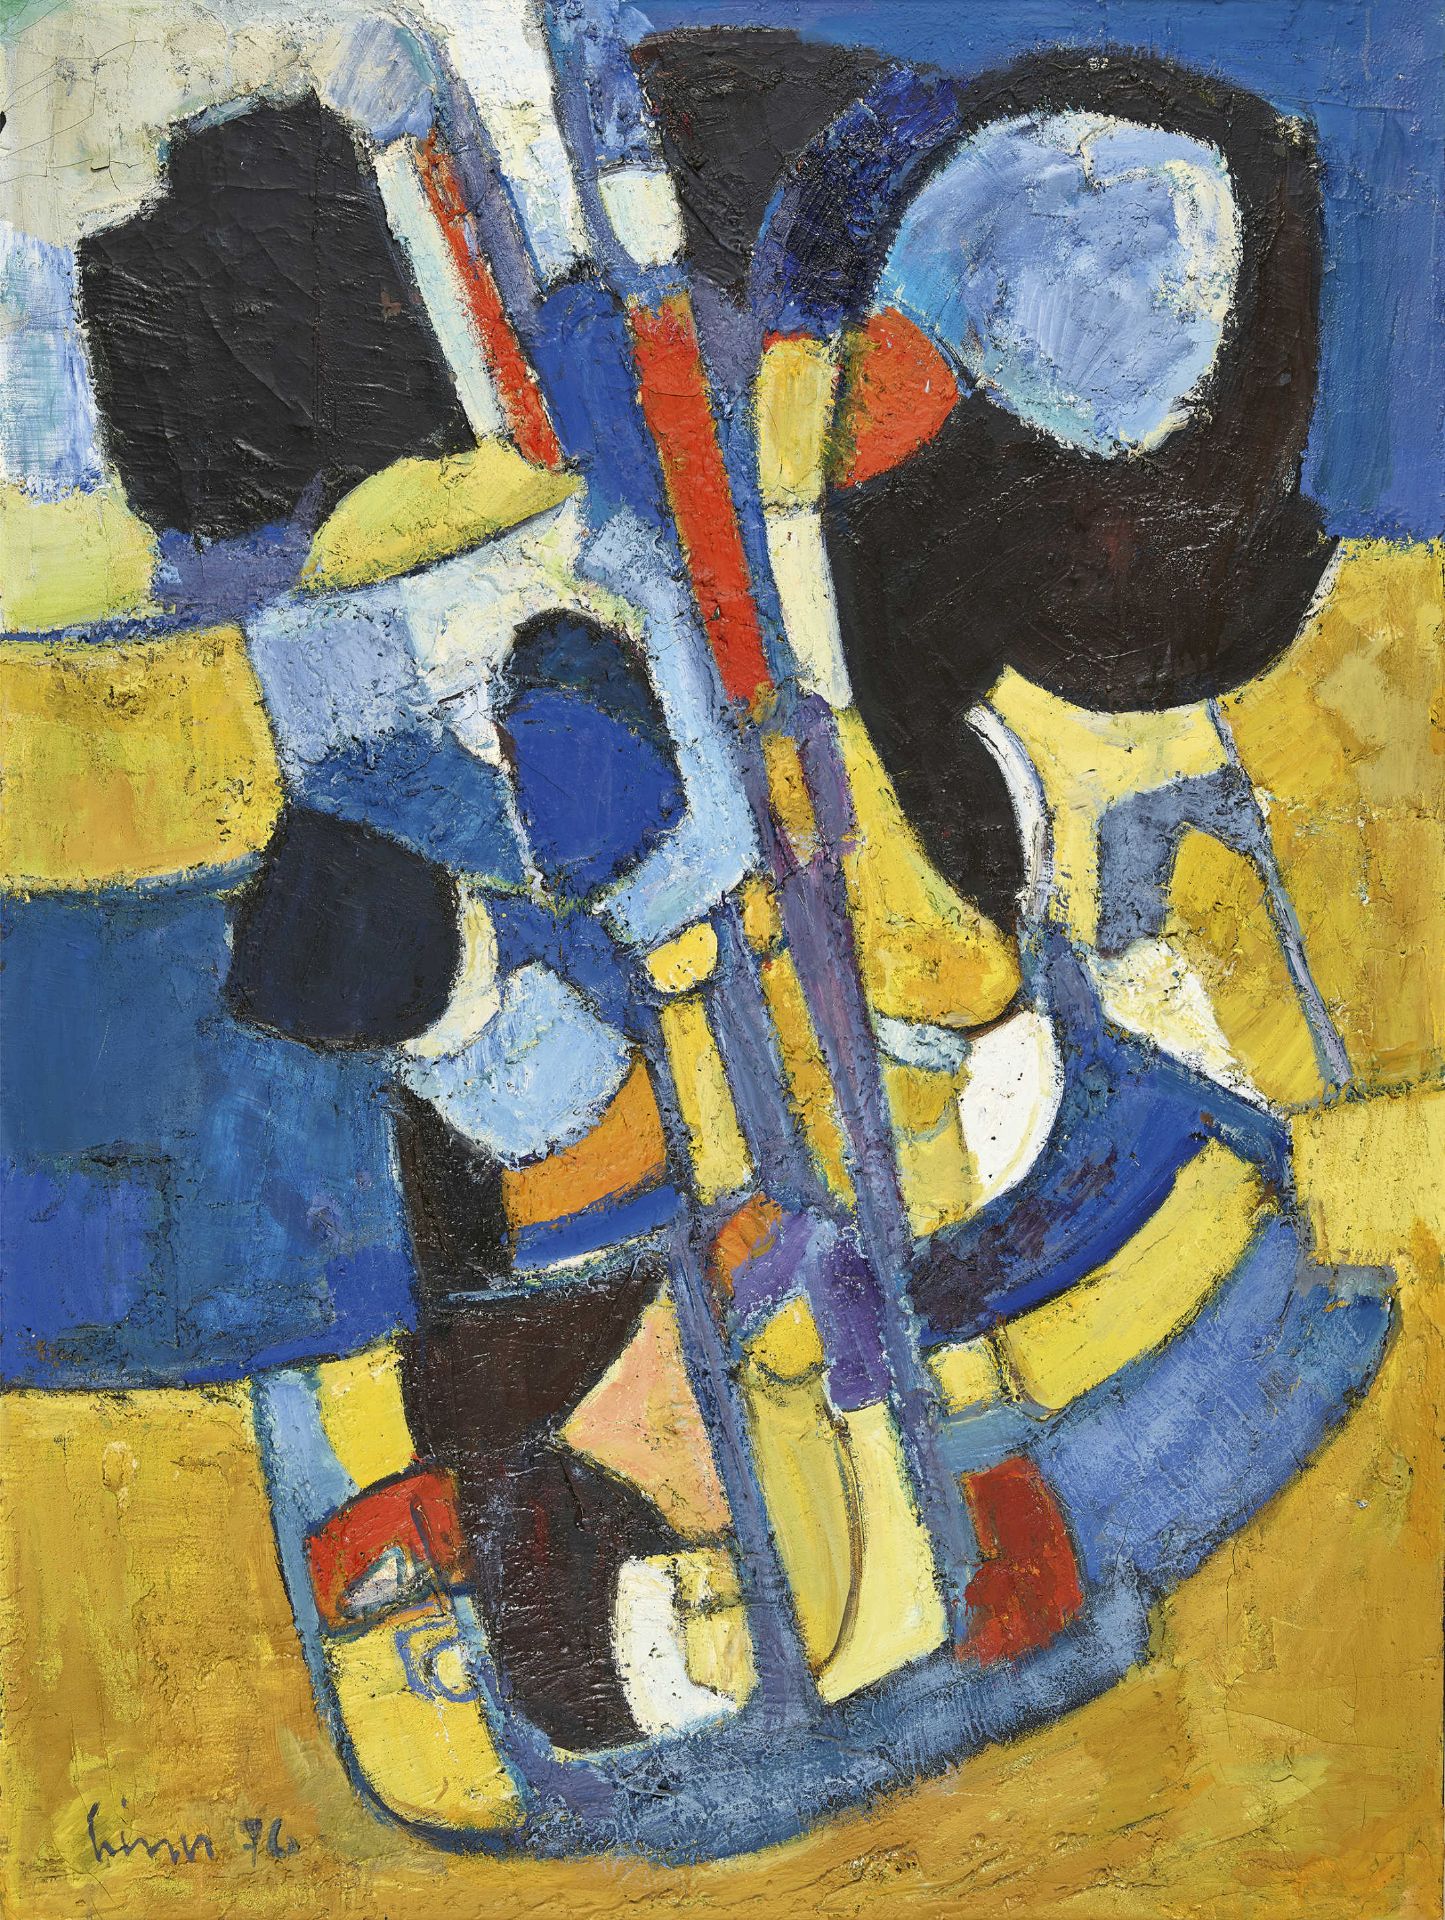 LINER, CARL WALTER: "Composition blau/gelb".